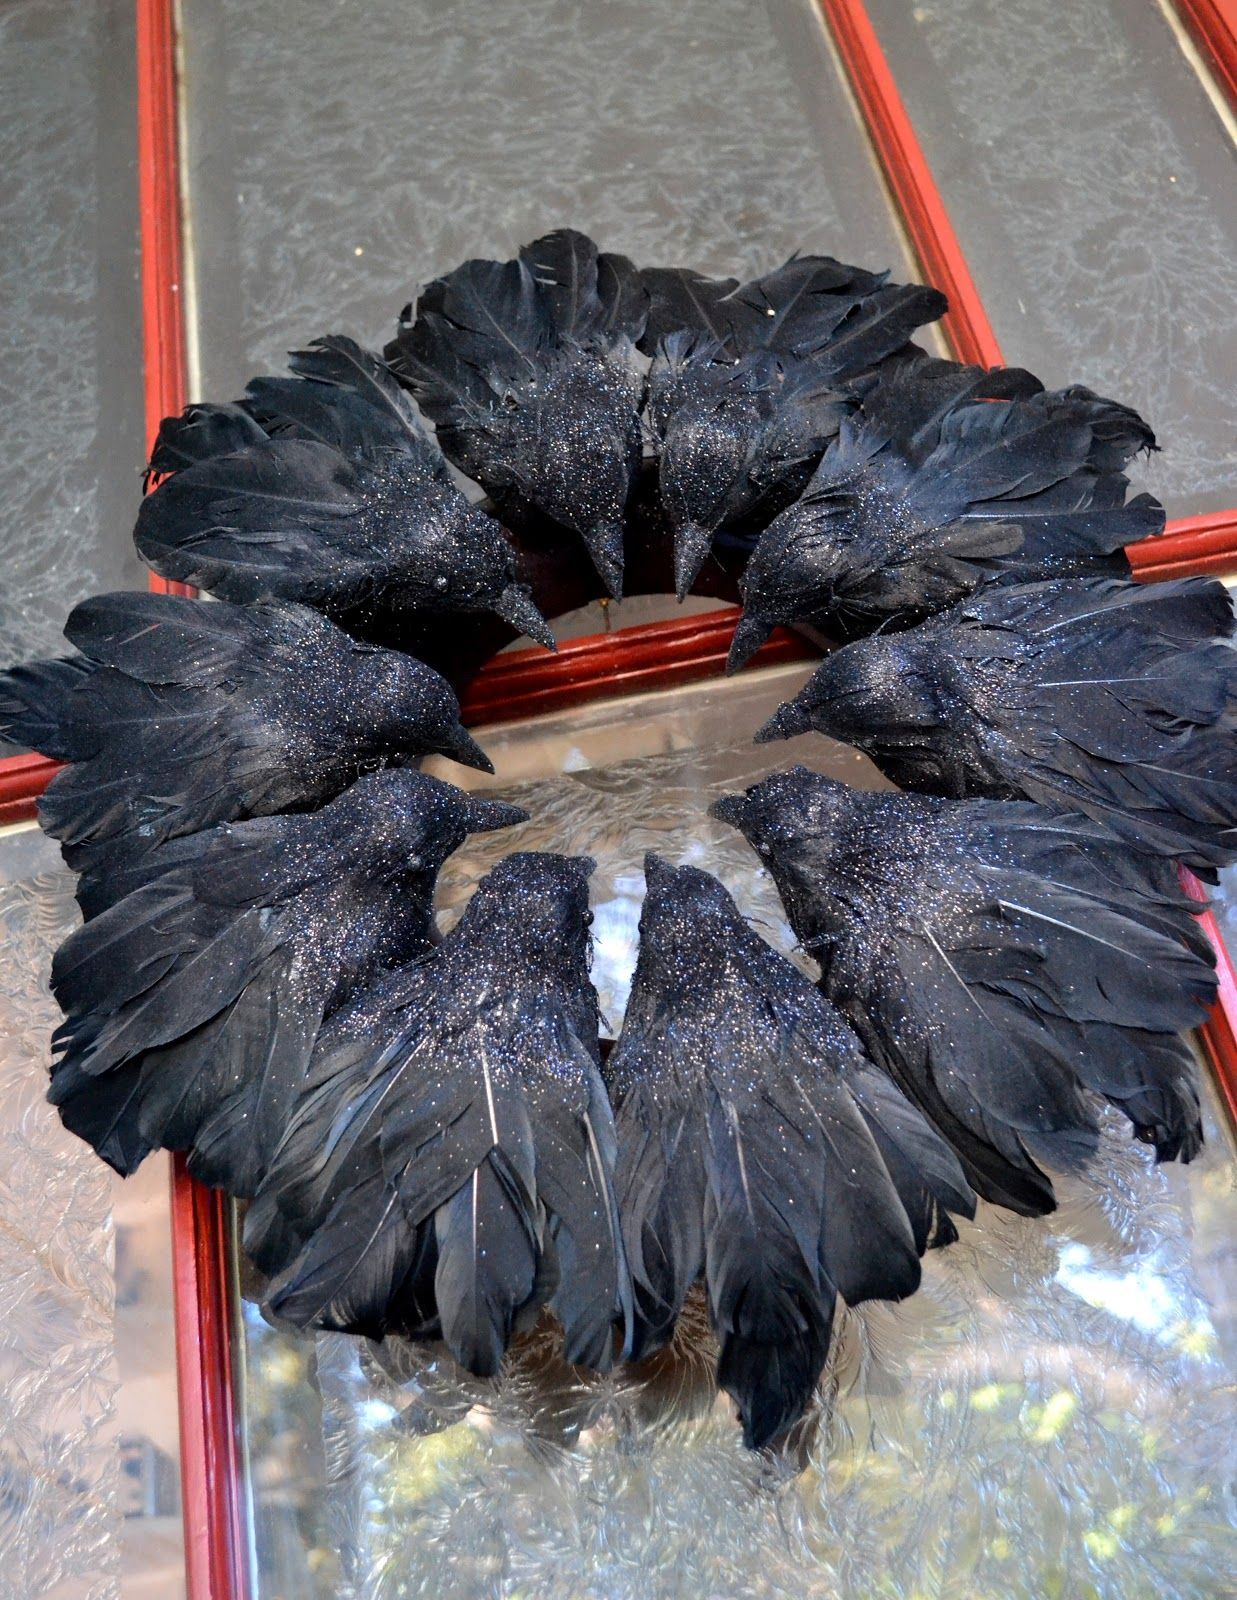 hot glue, Dollar Store black birds, foam wreath, black glitter, spray adhesive – remove legs from blackbirds, hot glue onto